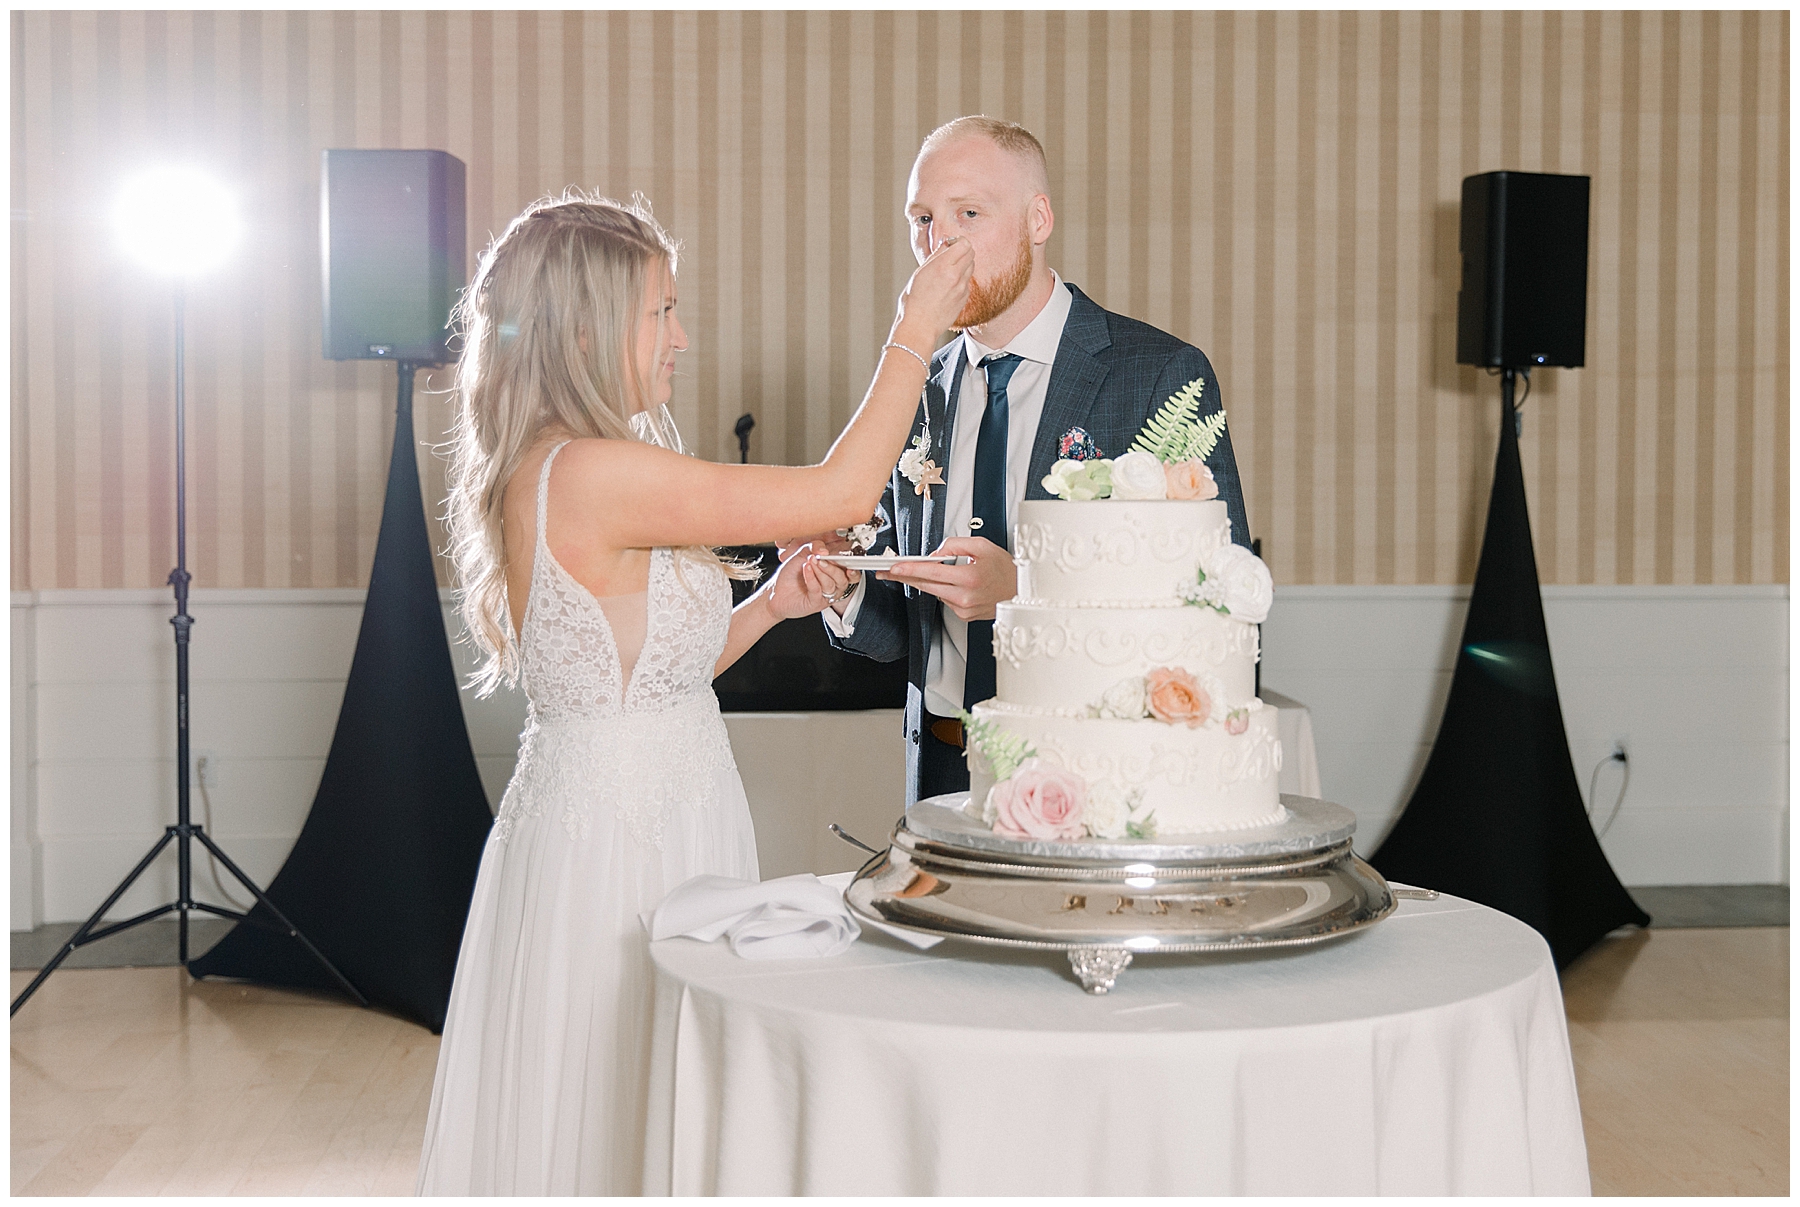 Bride + groom cut wedding cake at reception in Gloucester MA